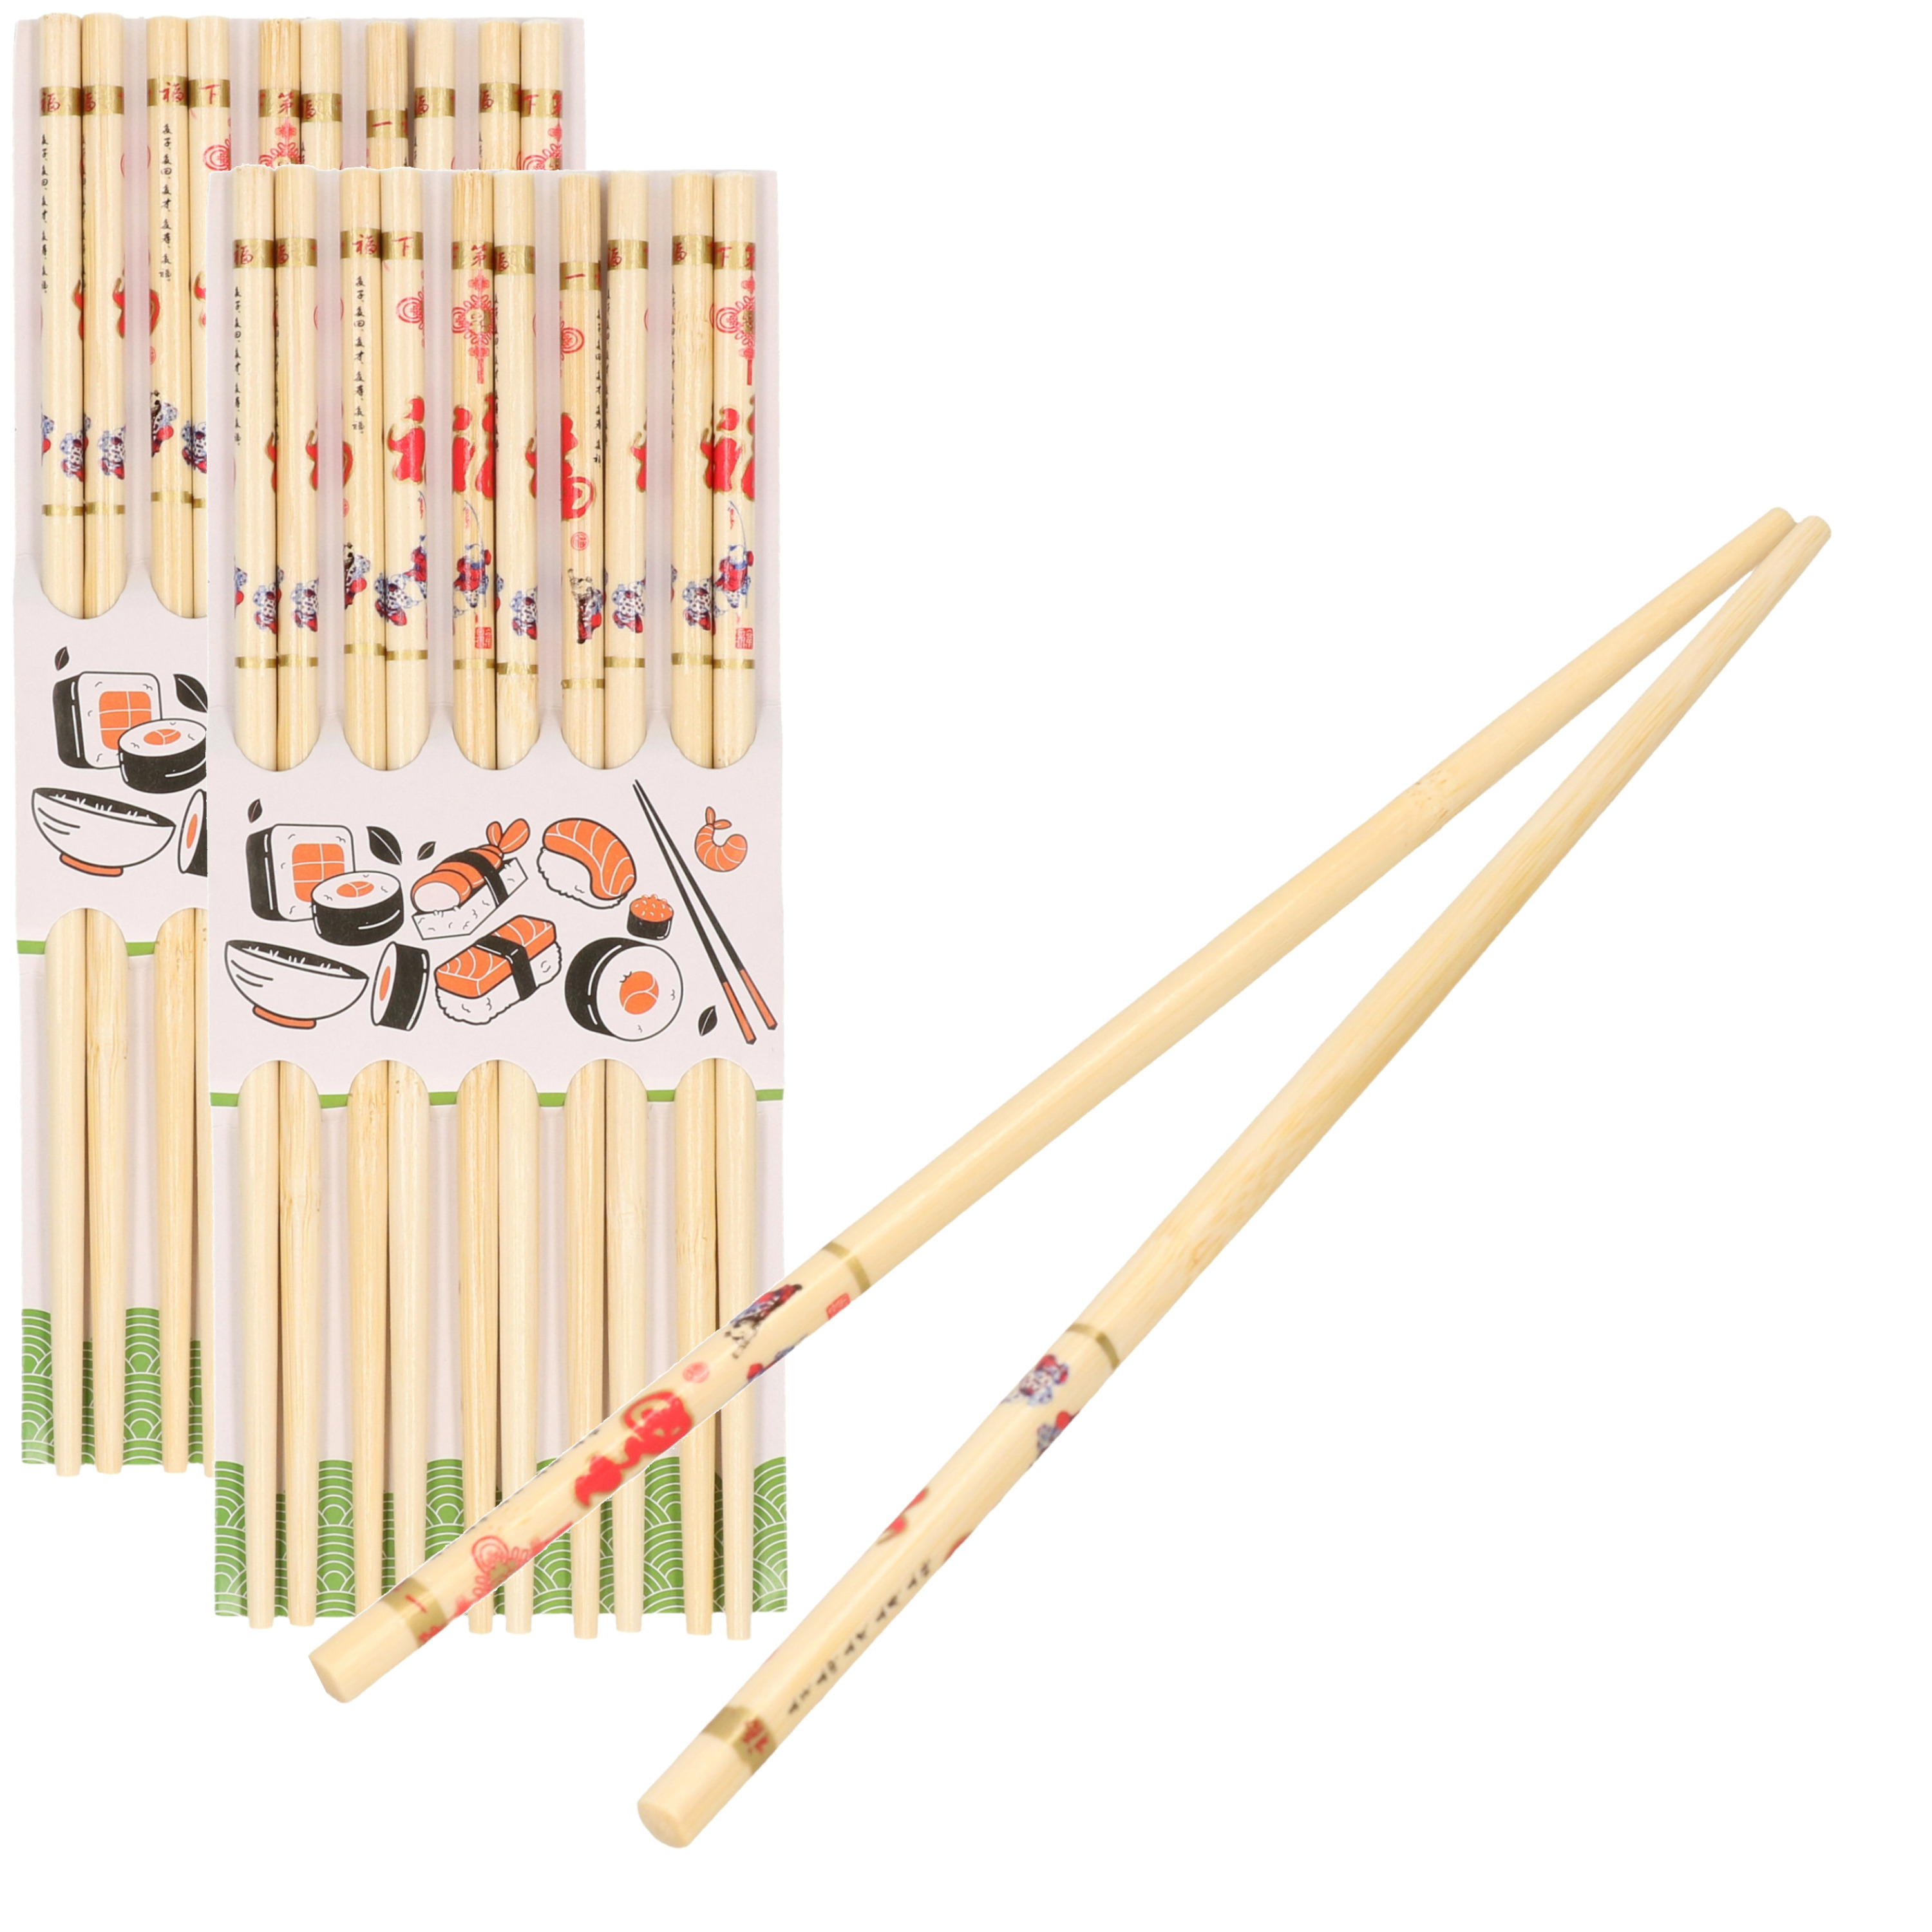 Sushi eetstokjes 30x setjes bamboe hout kleurrijke print 24 cm